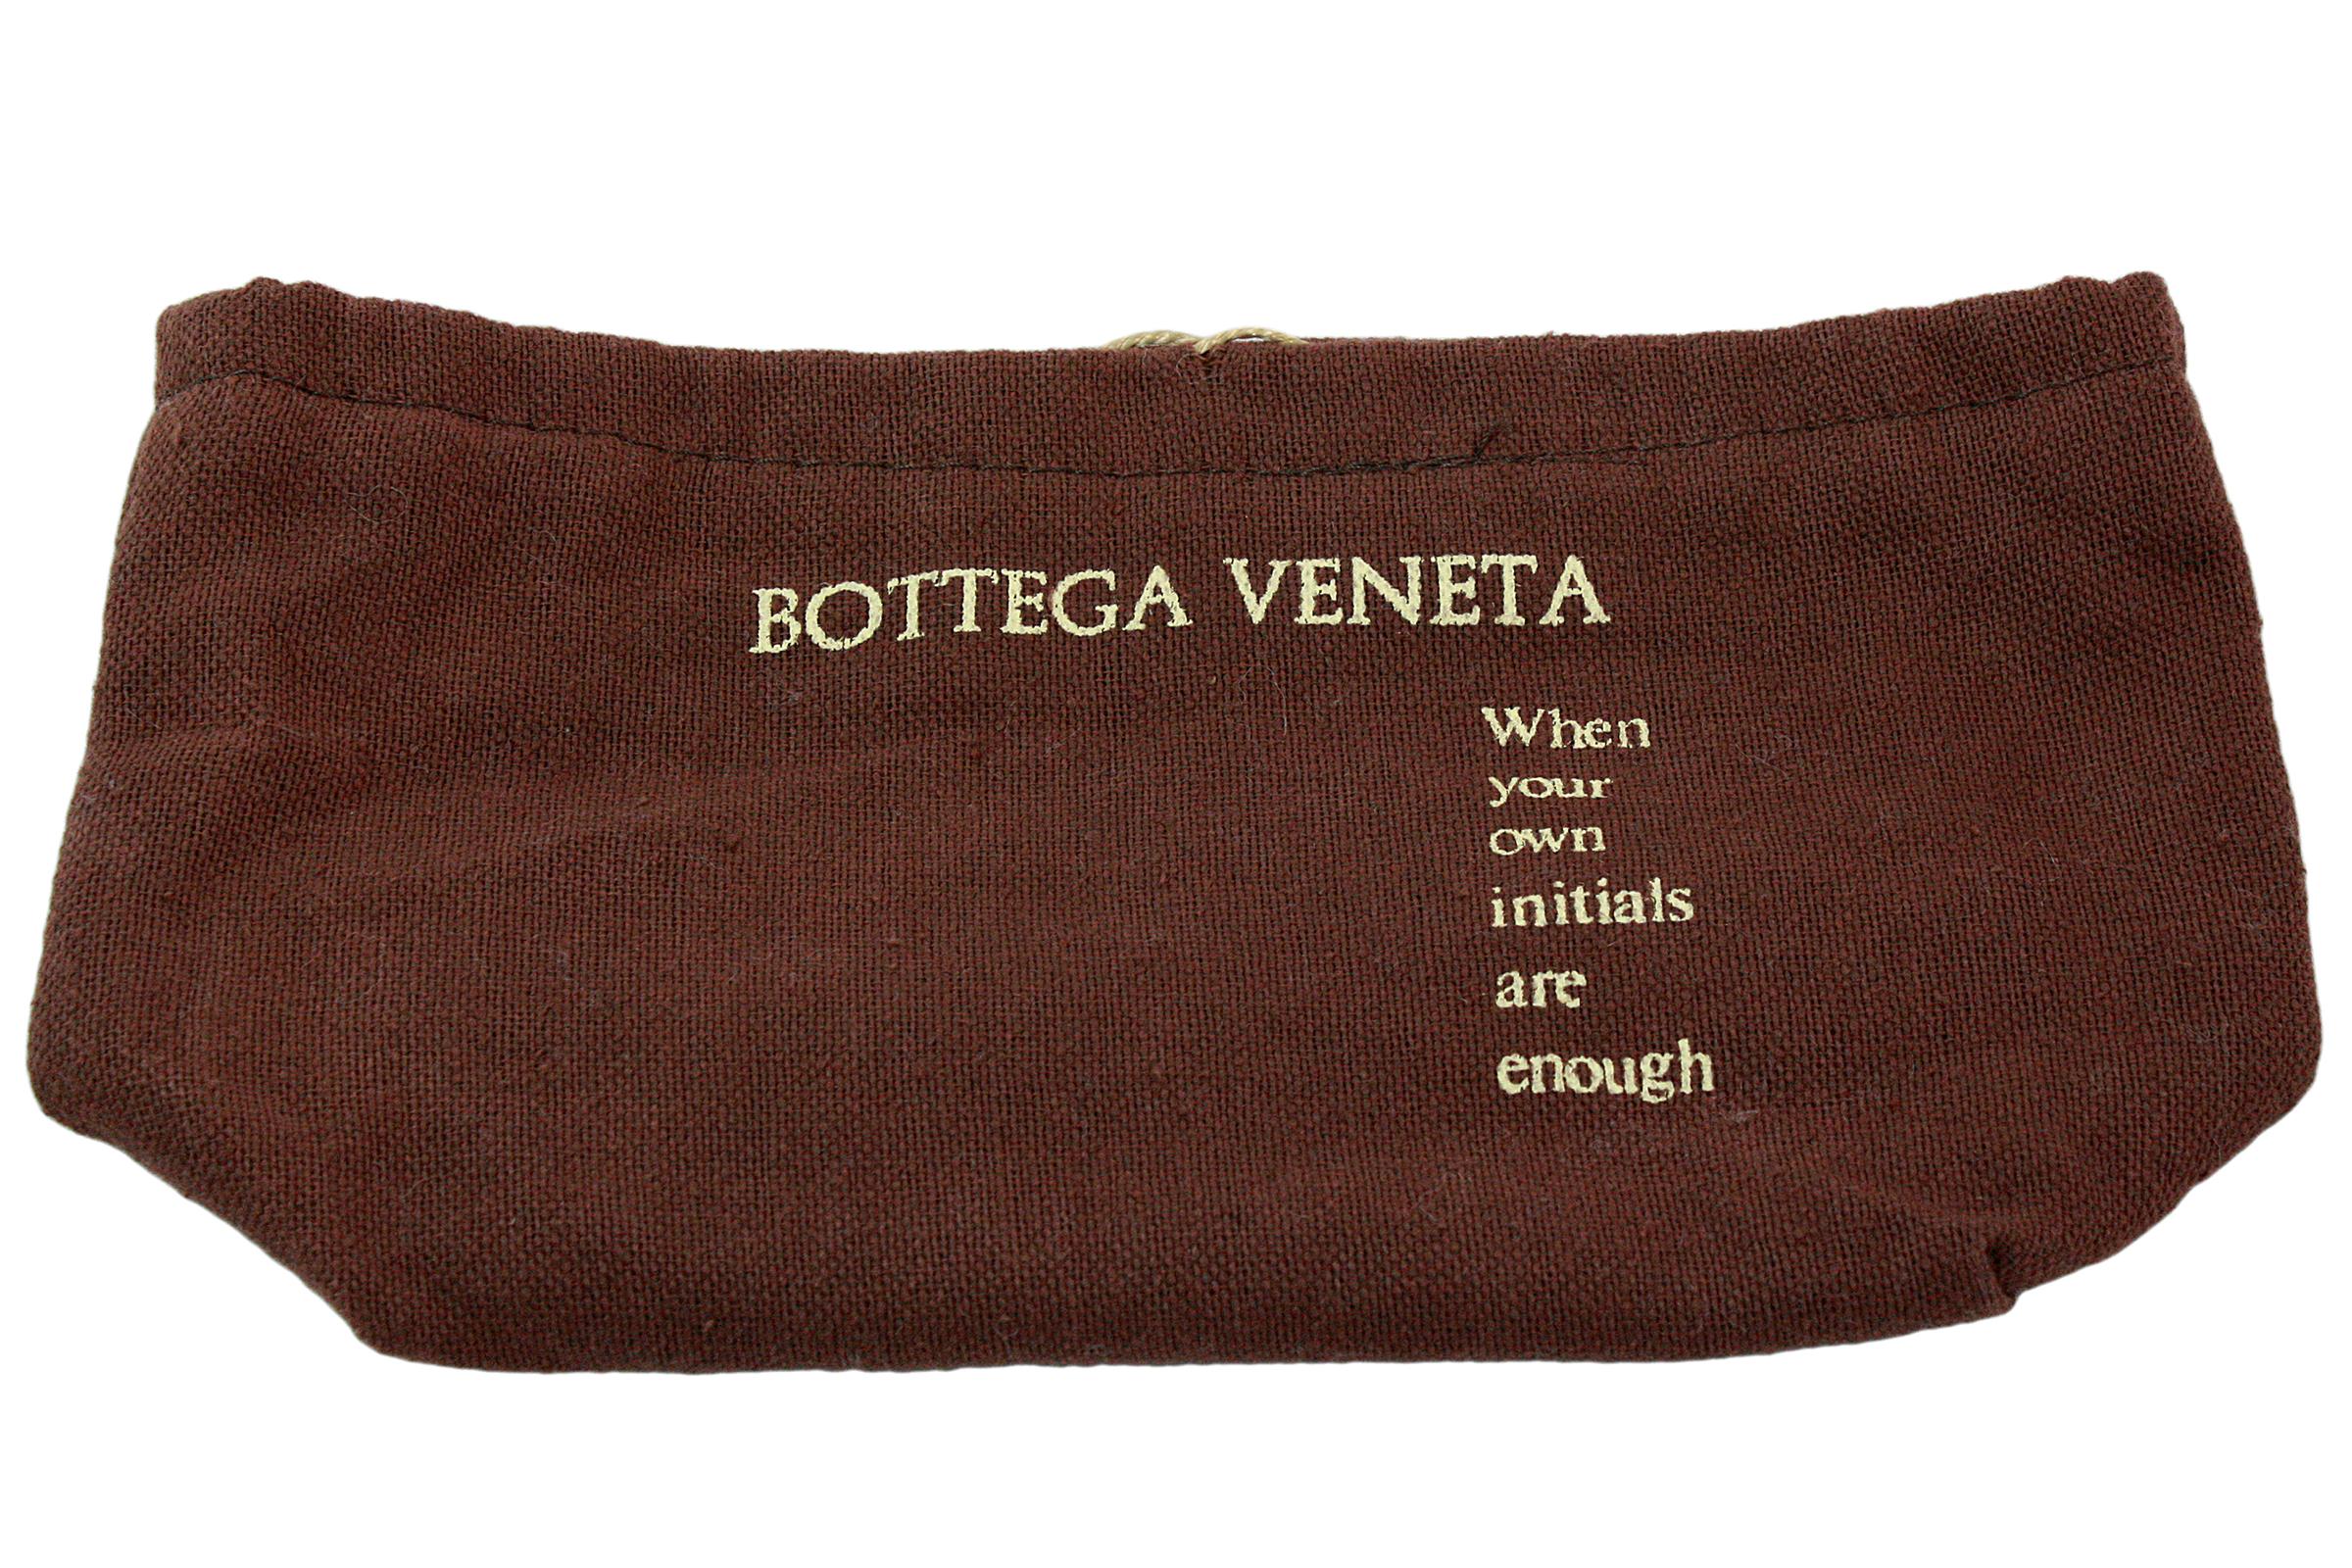 Bottega Veneta Black Satin Woven Clutch with Tassel For Sale 2